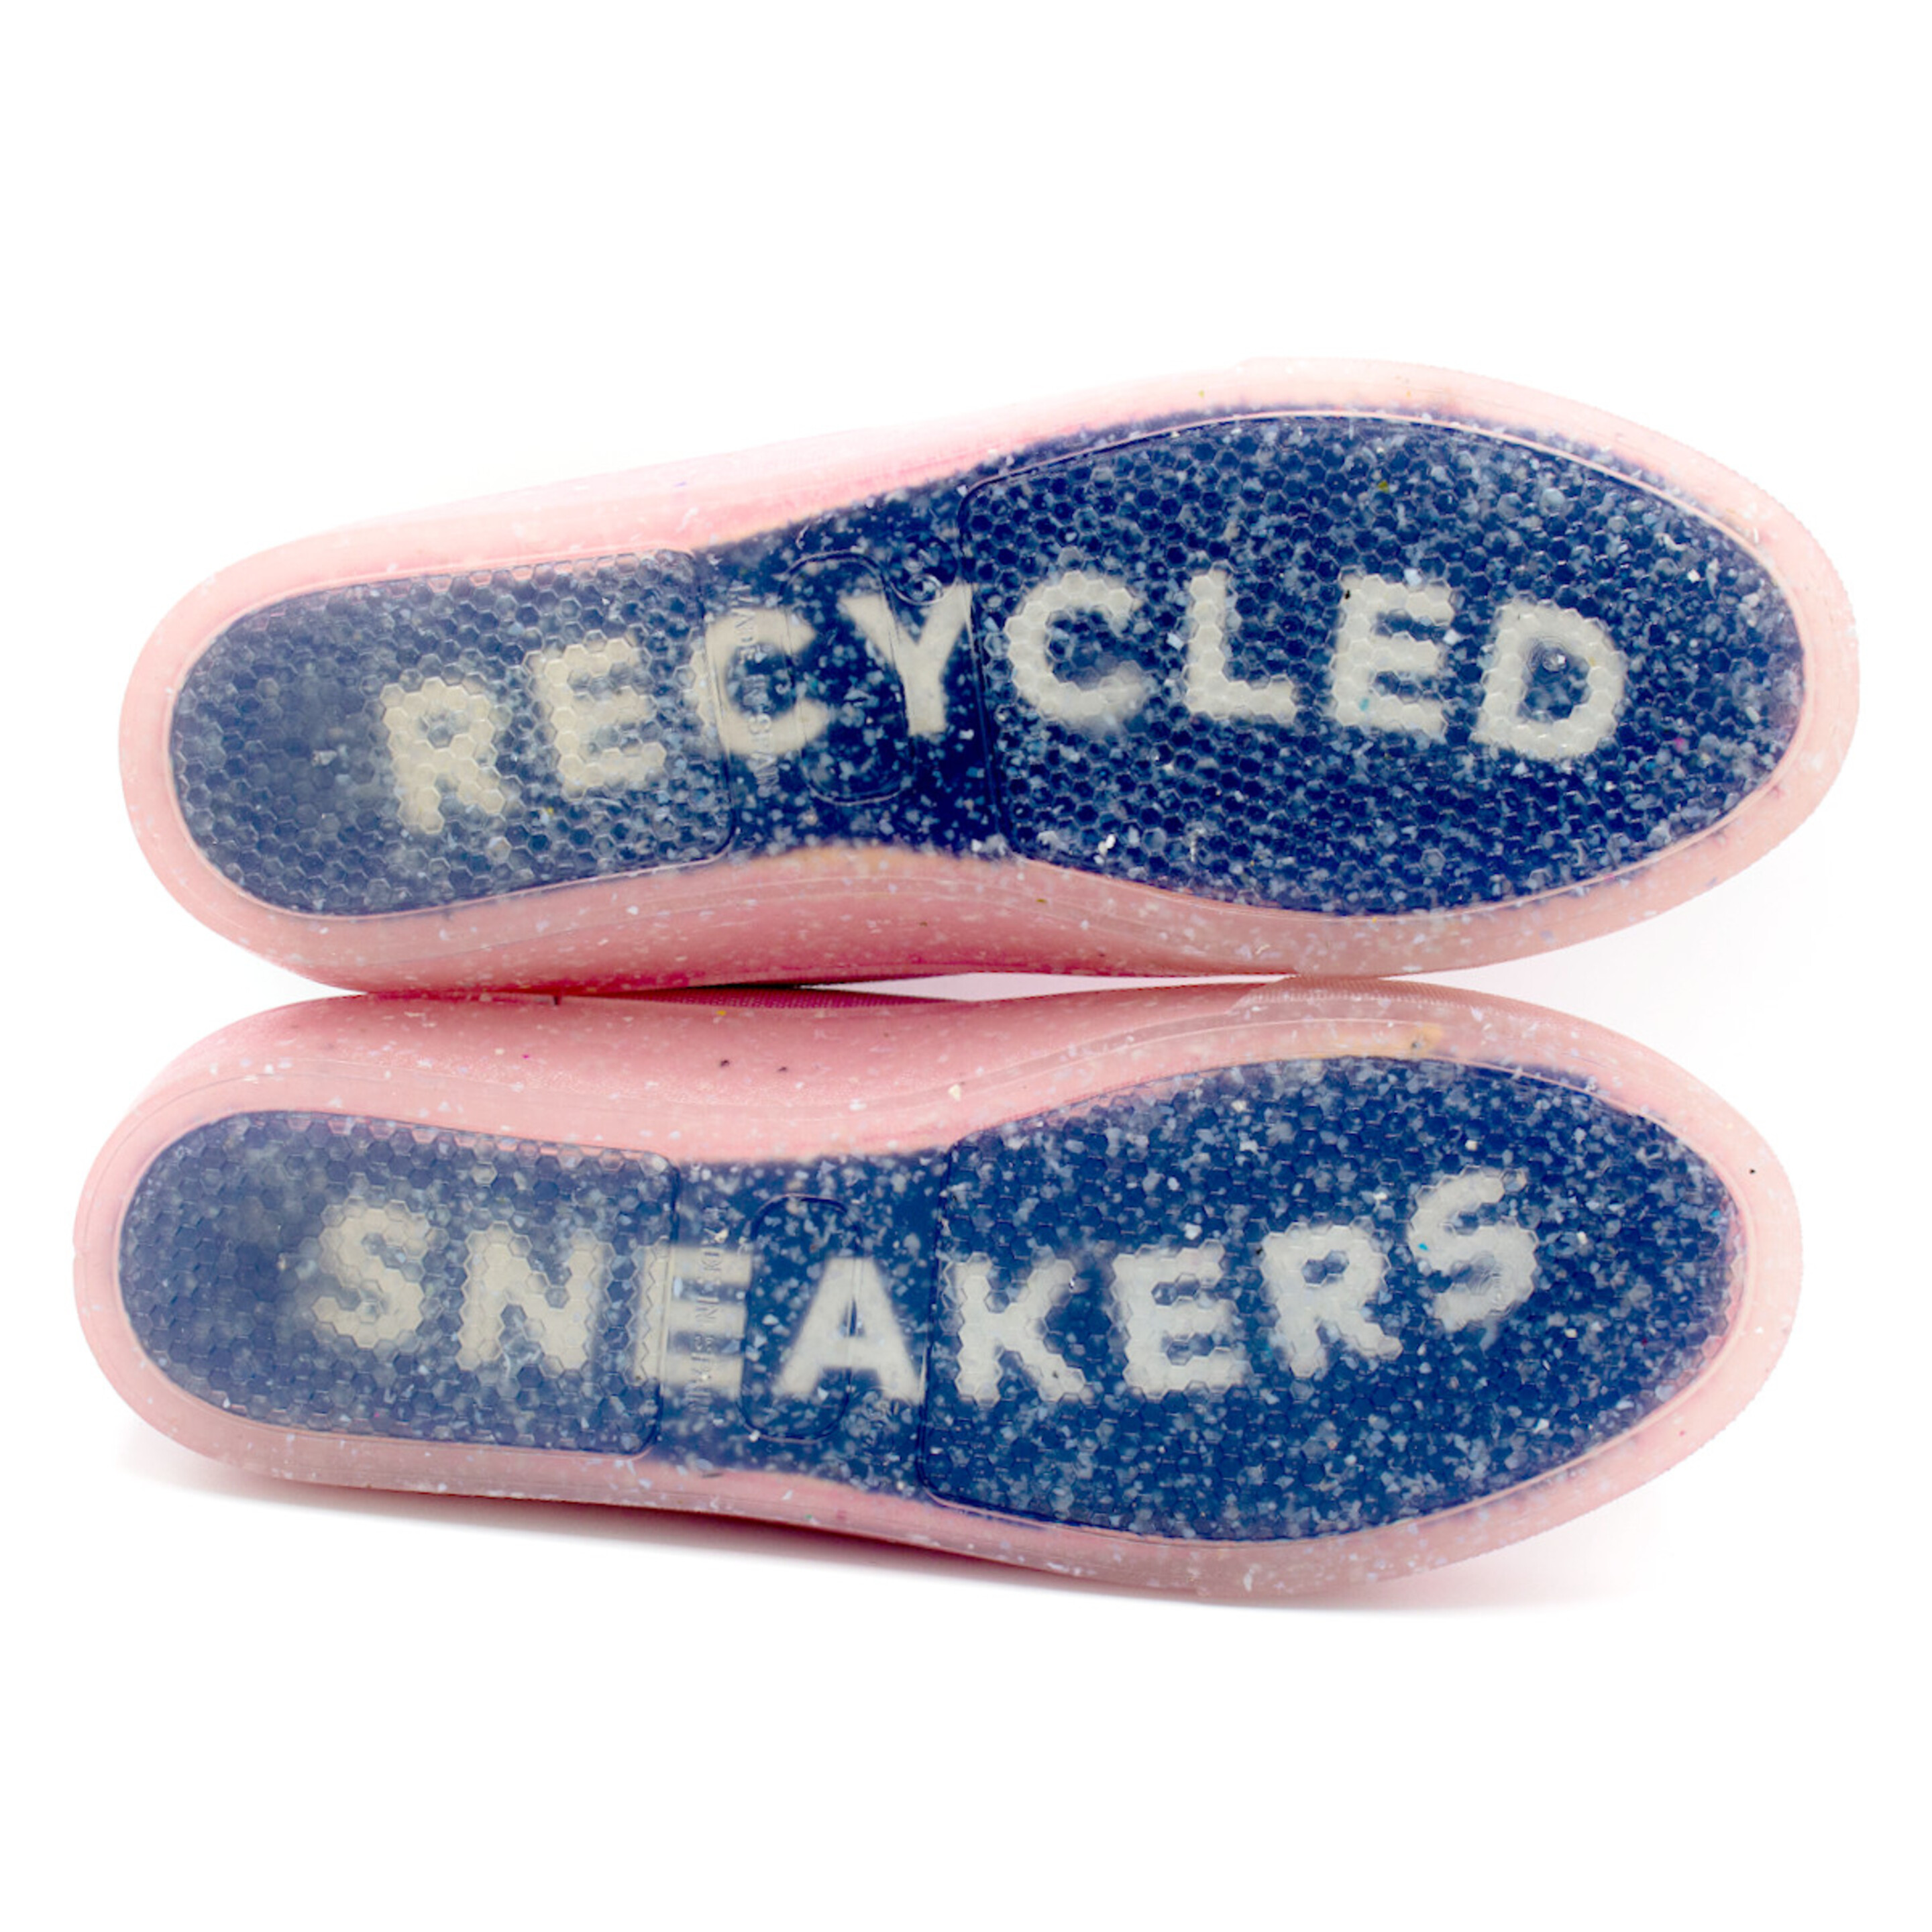 Sneaker Recykers Candem - rosa - Casual Mujer  MKP